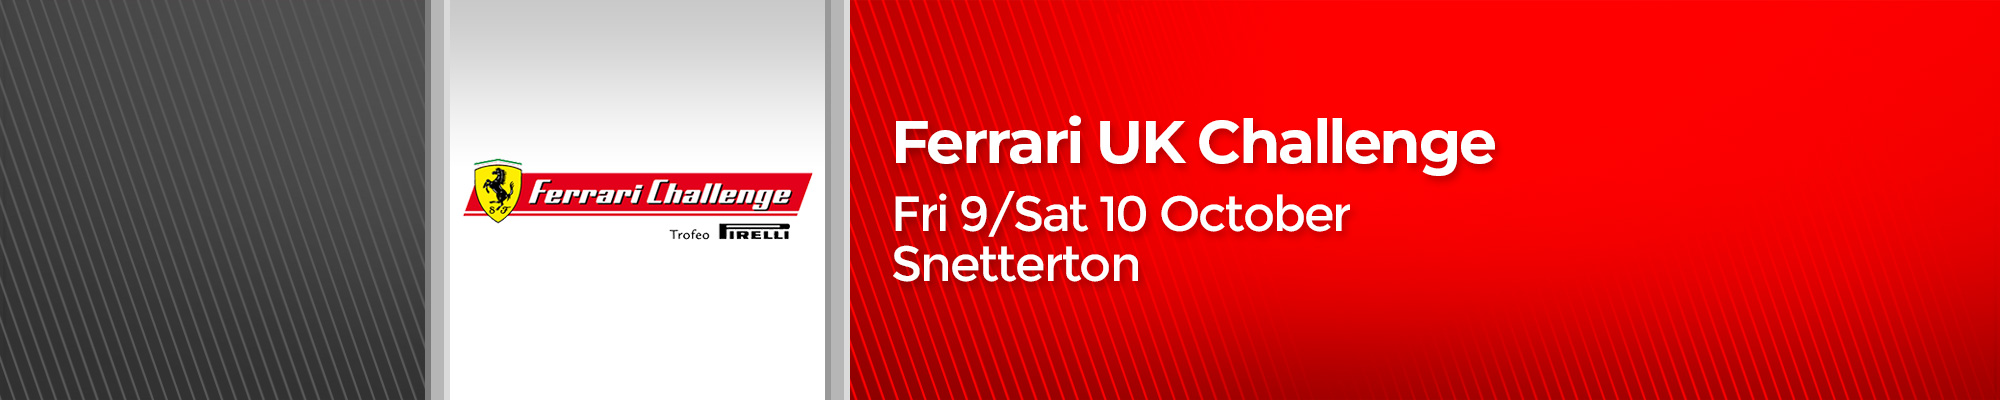 Ferrari Challenge UK 